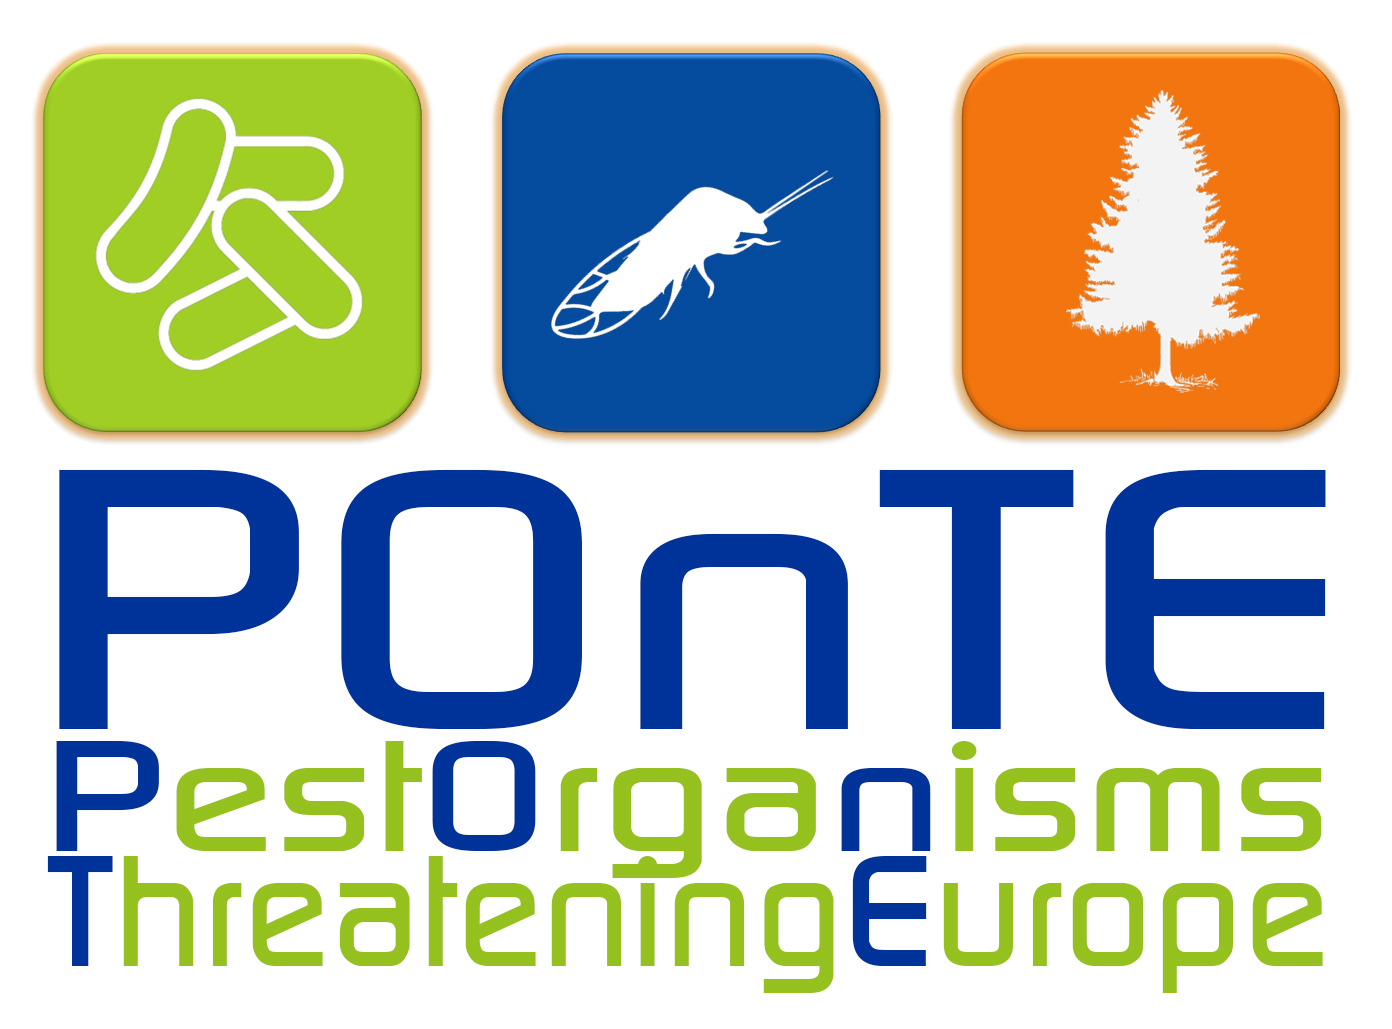 Pest Organisms Threatning Europe